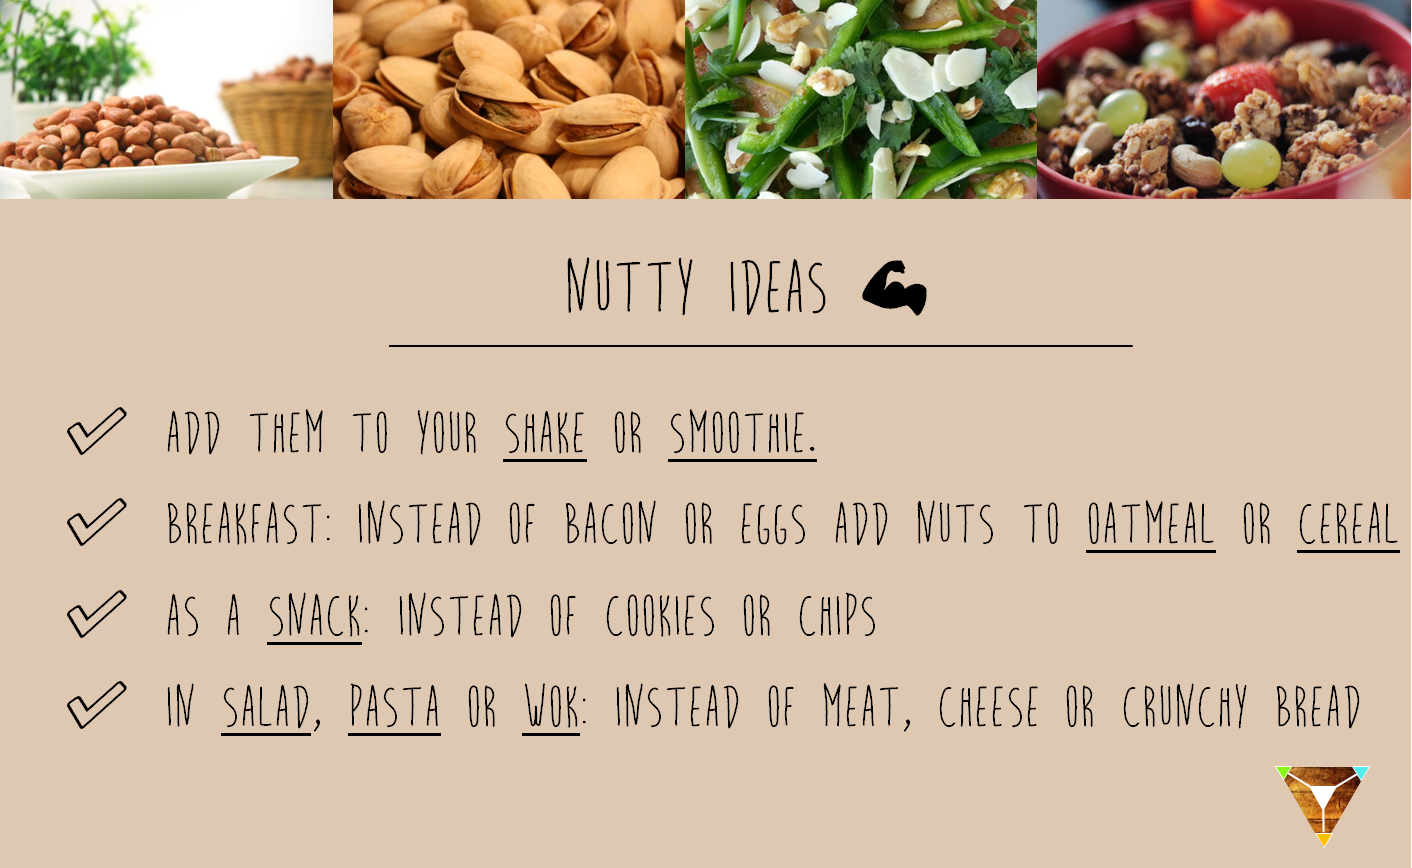 15 Nutty Ideas 6